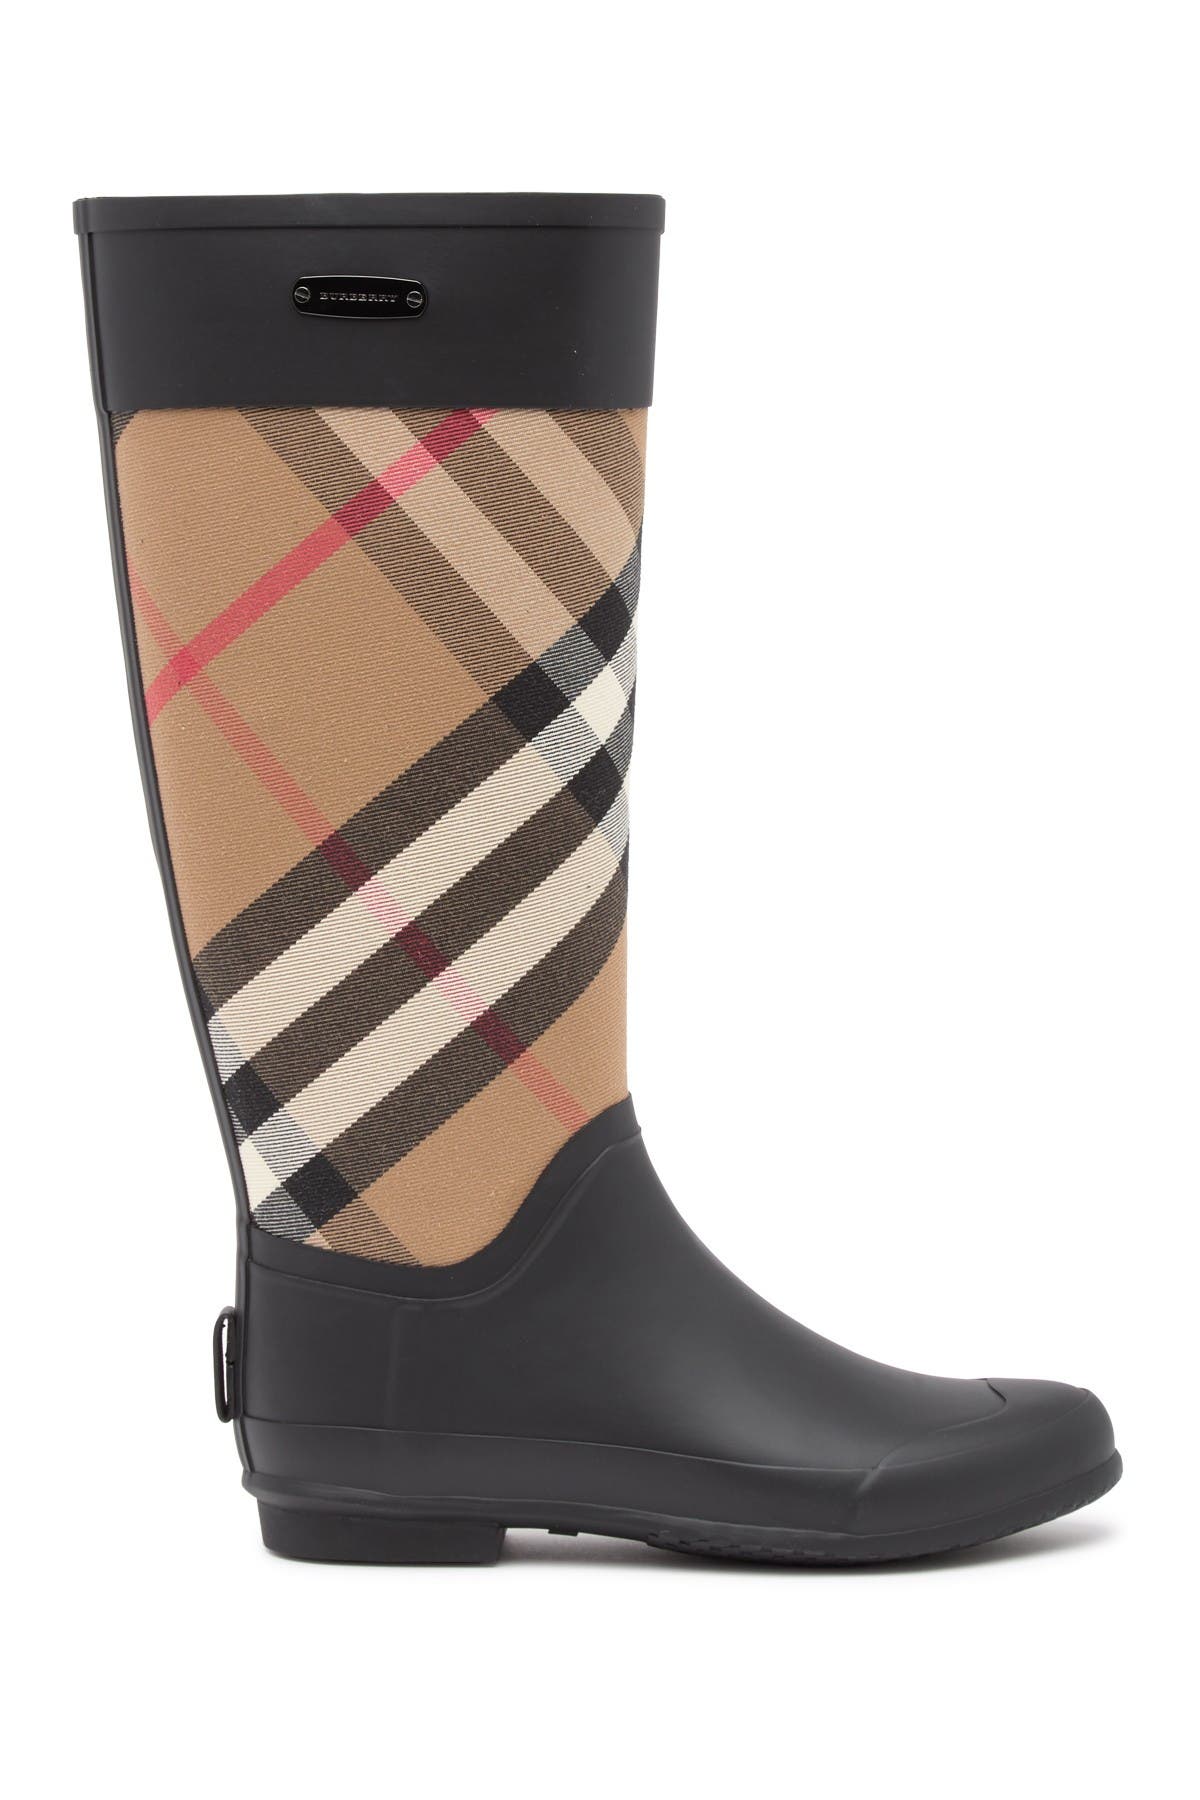 burberry low rain boots